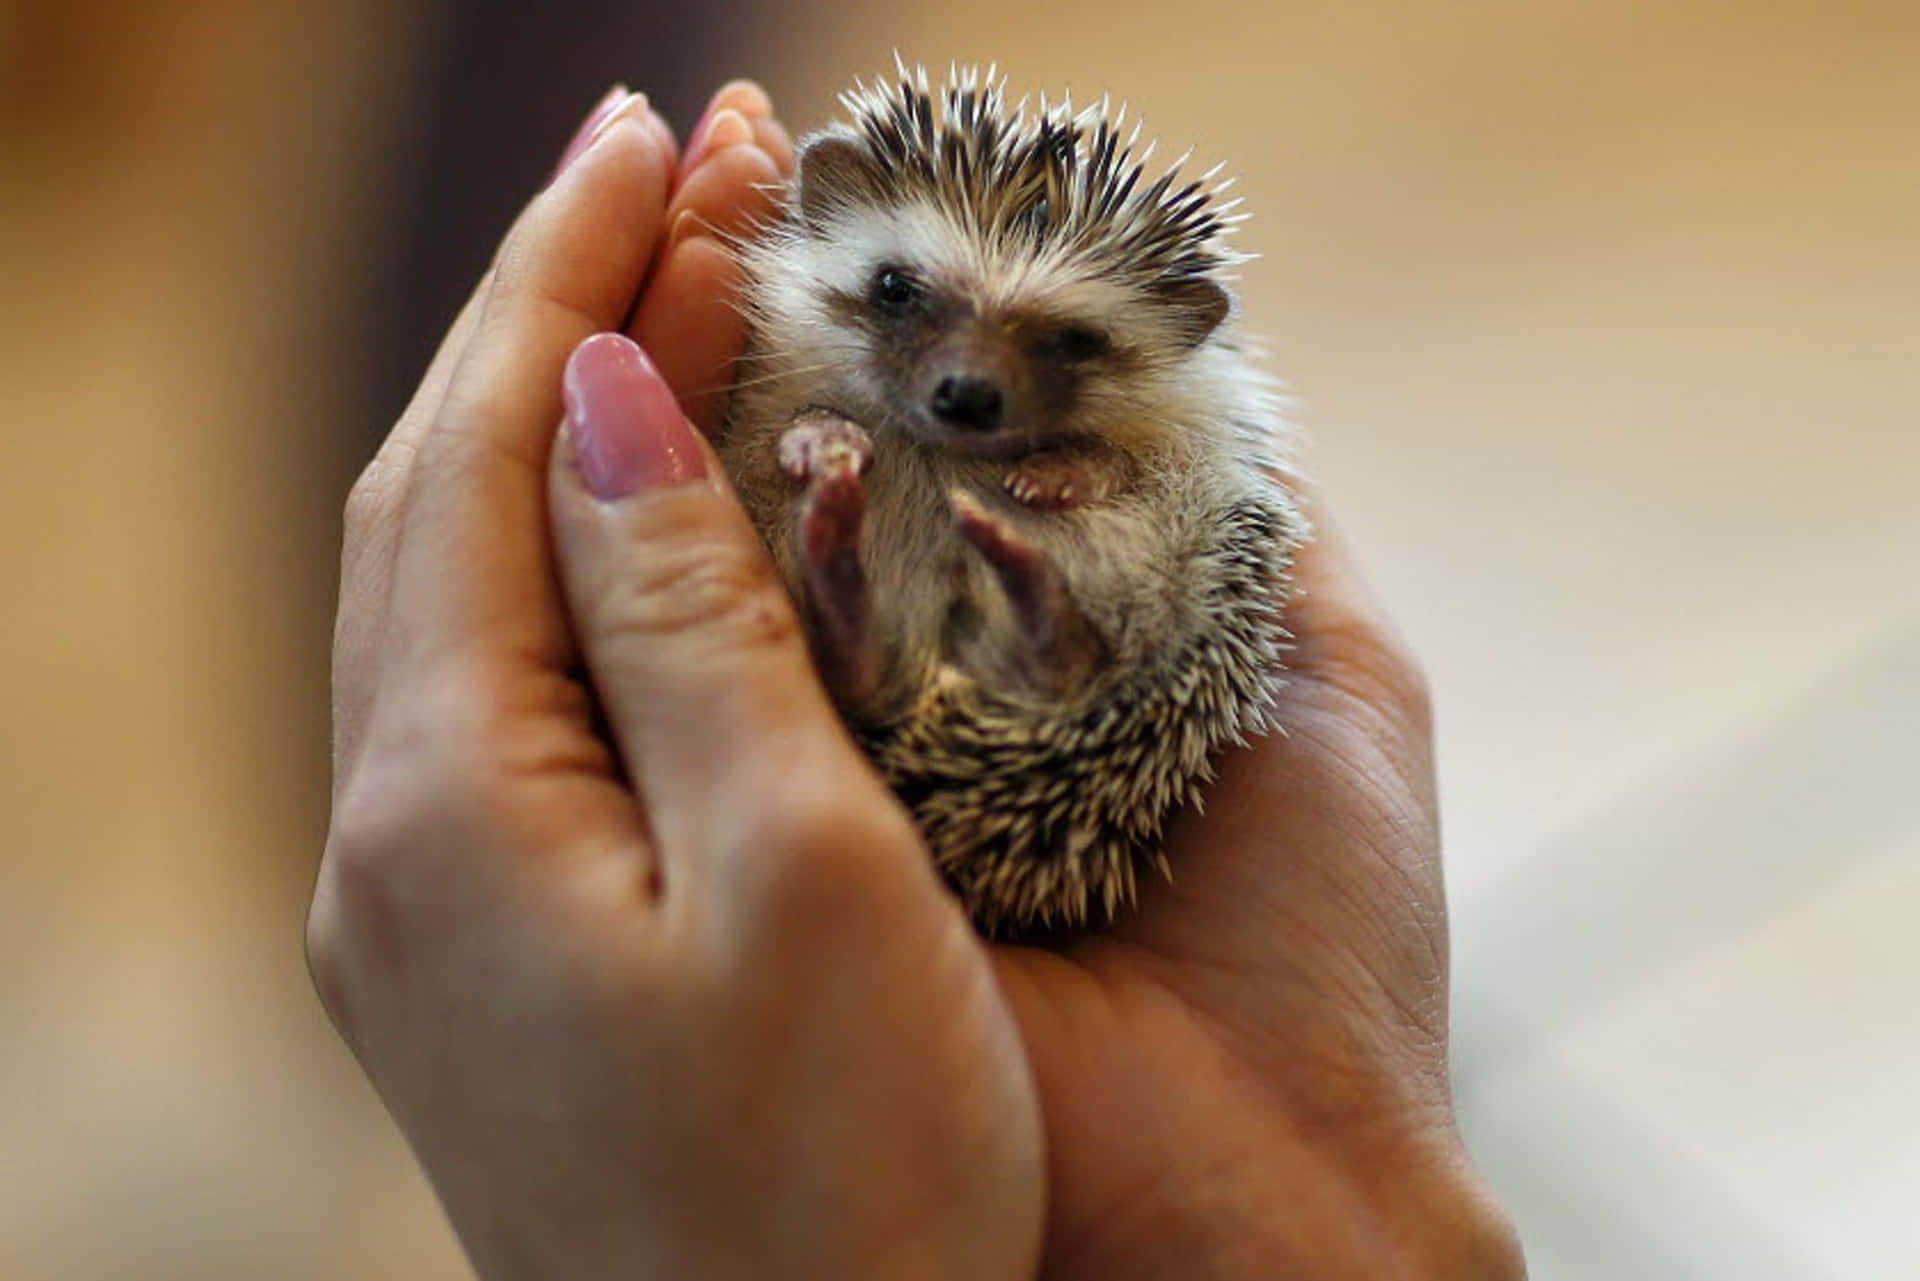 Cute Hedgehog Held In Hands Picture